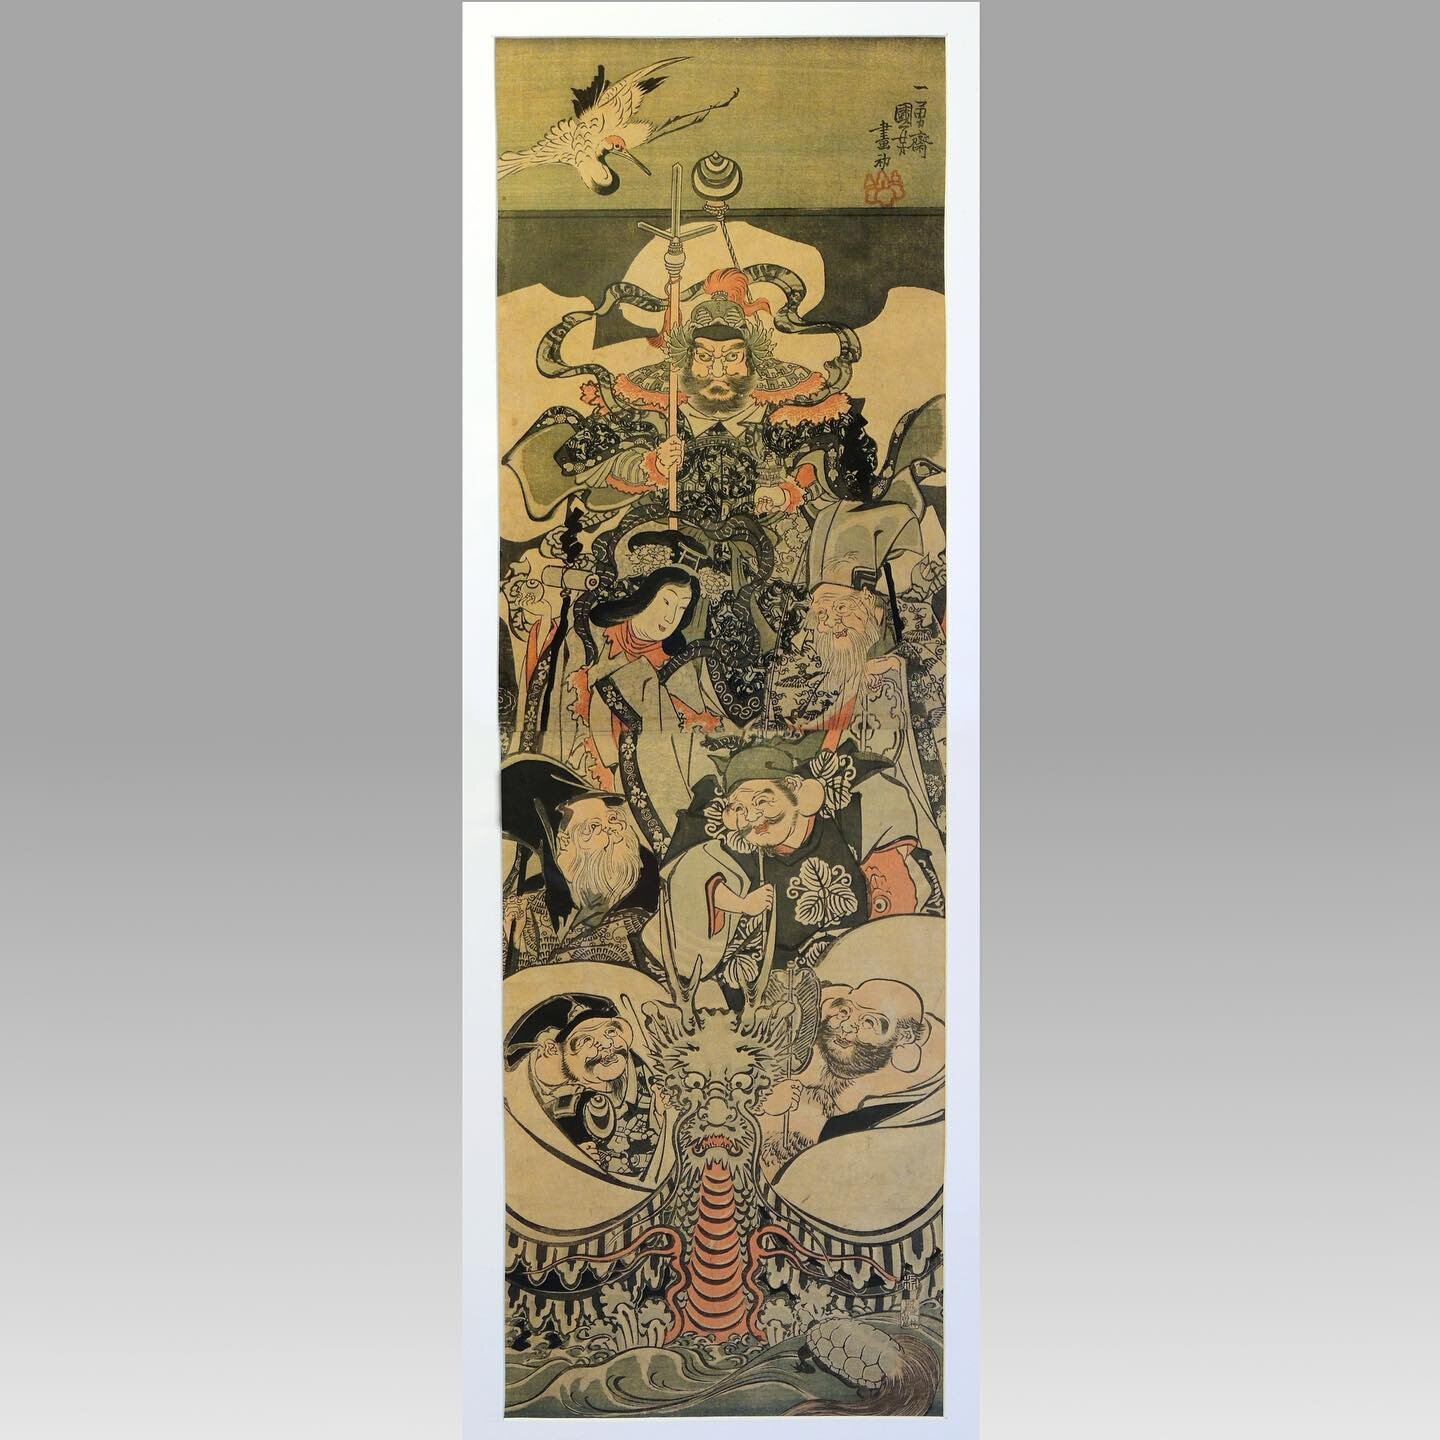 19th century Japanese prints of the seven lucky gods by UTAGAWA, KUNIYOSHI.  #japan #japanese #japaneseart #japaneseartist #japaneseantique #japaneseprint #japaneseprints #japaneseartgallery #japaneseartmuseum #japanesegods #art #artist #artists #art